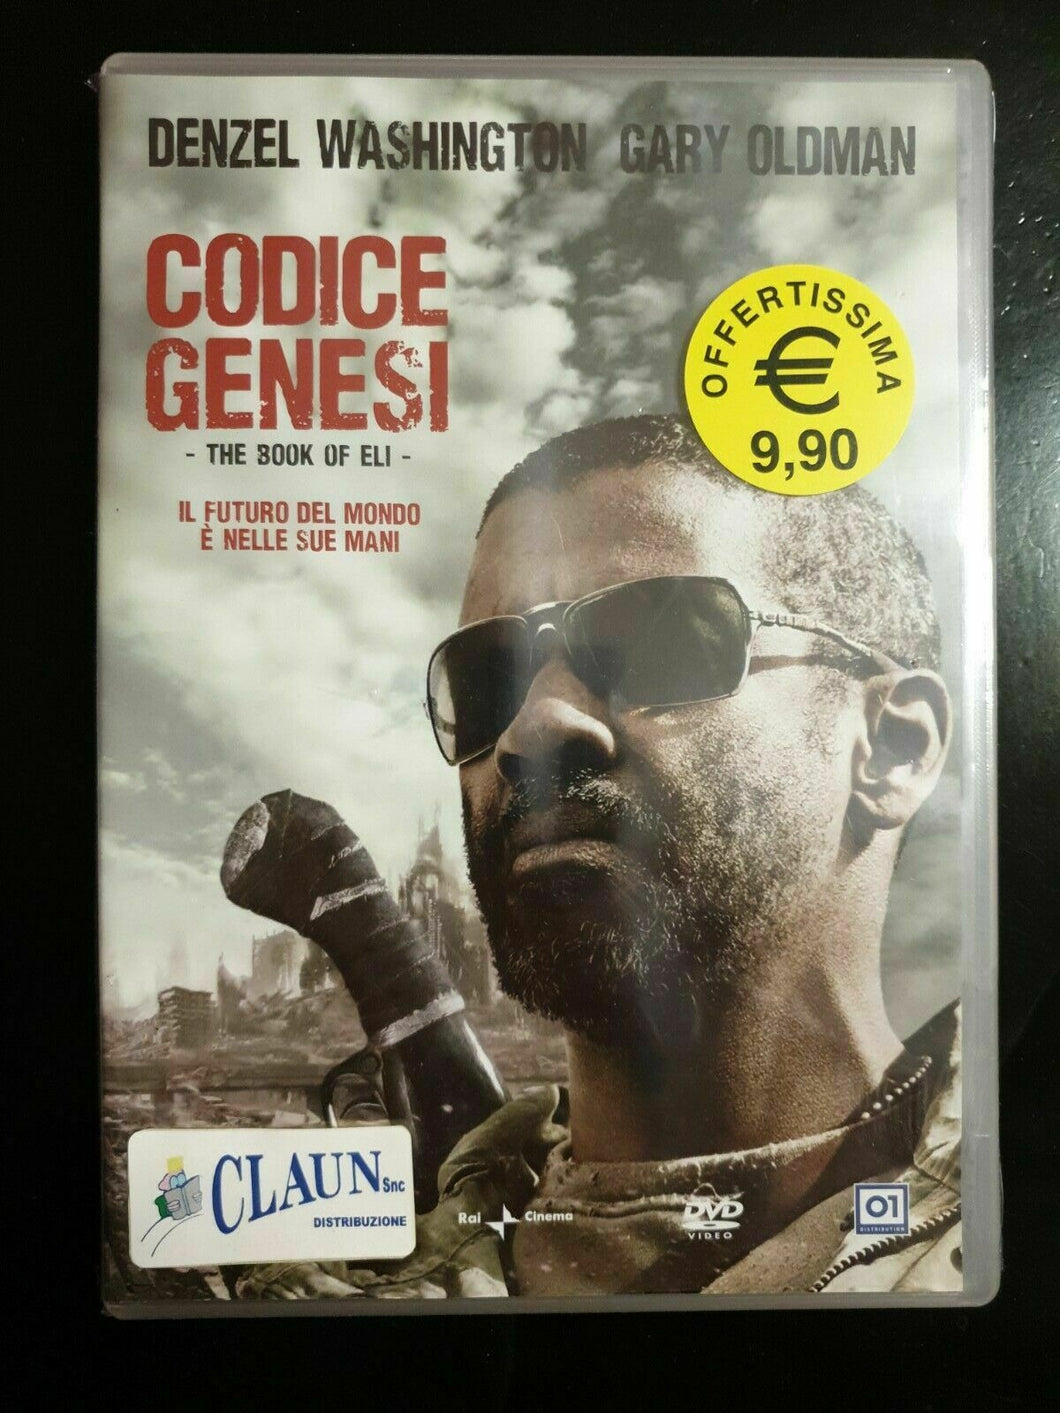 CODICE GENESI Denzel Washington Gary Oldman DVD Nuovo